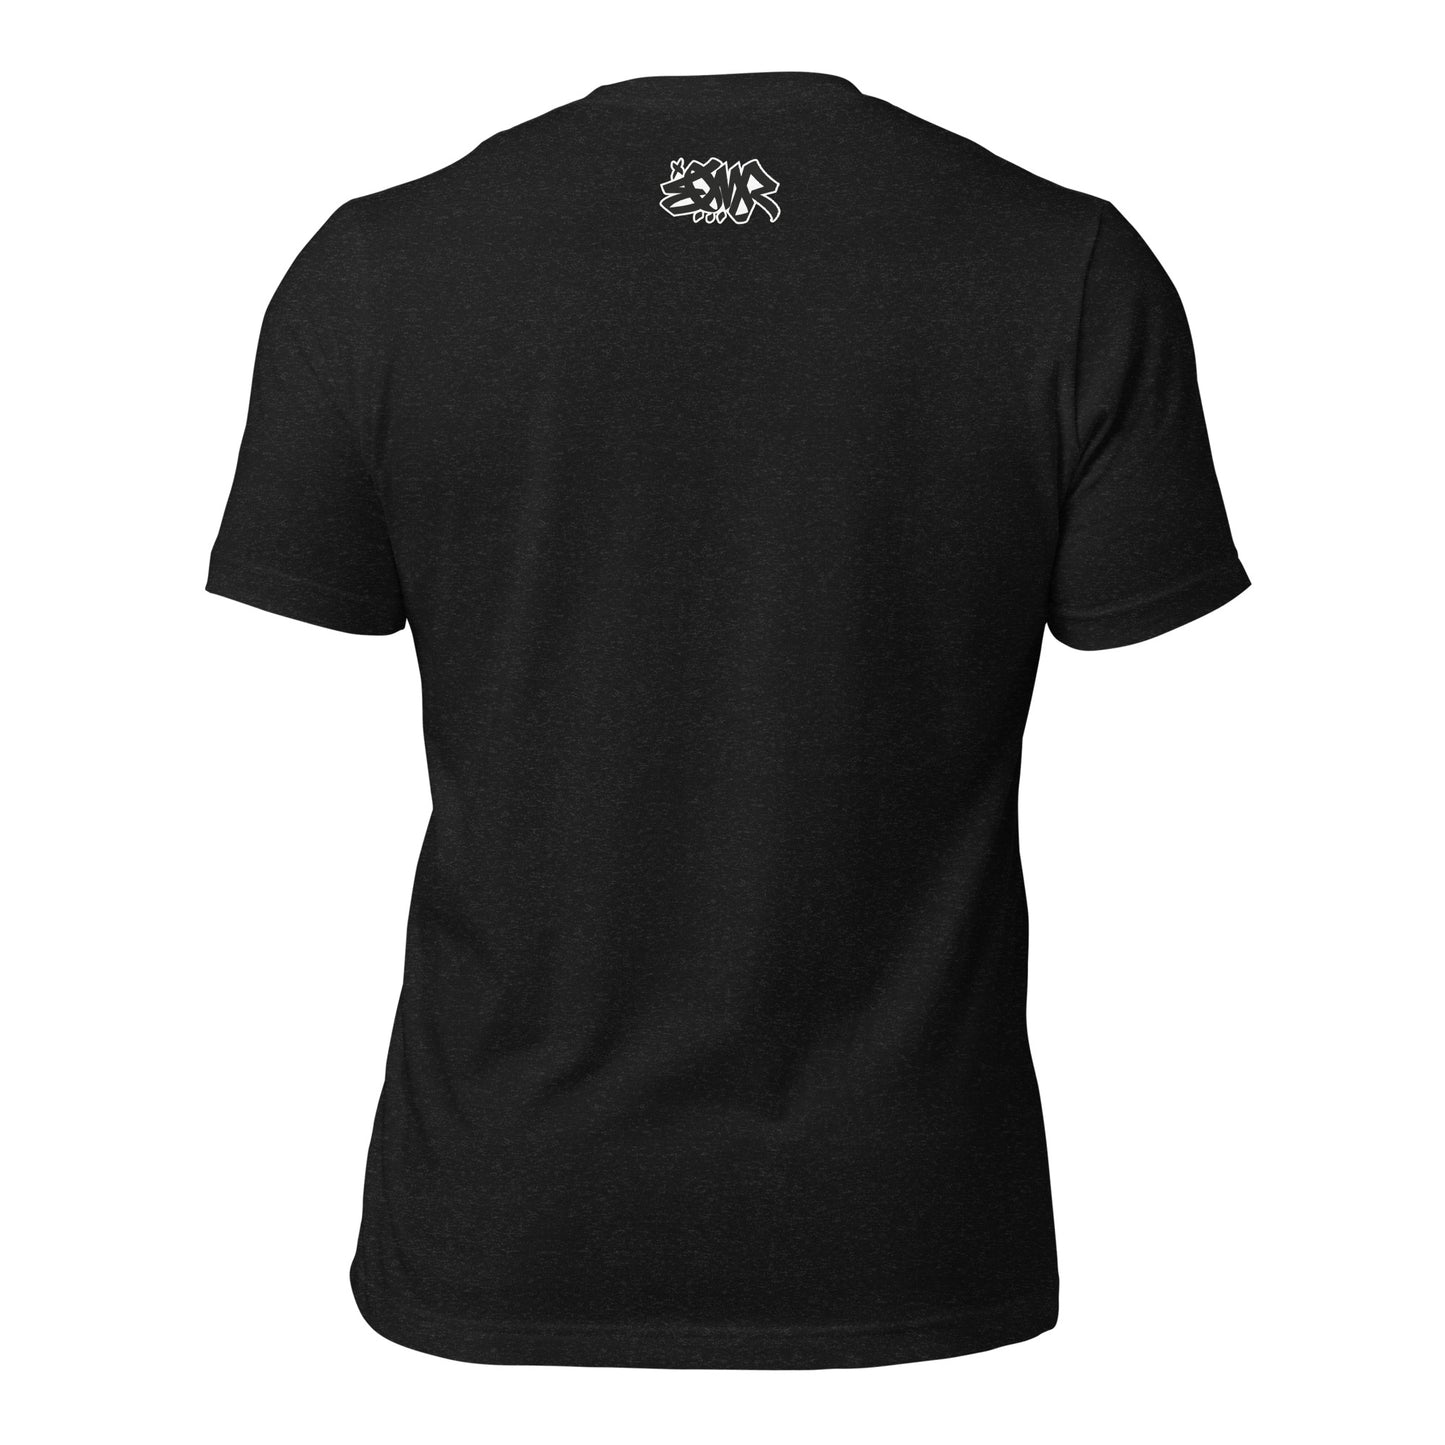 Unisex t-shirt "Desarmadillo" 3GSS